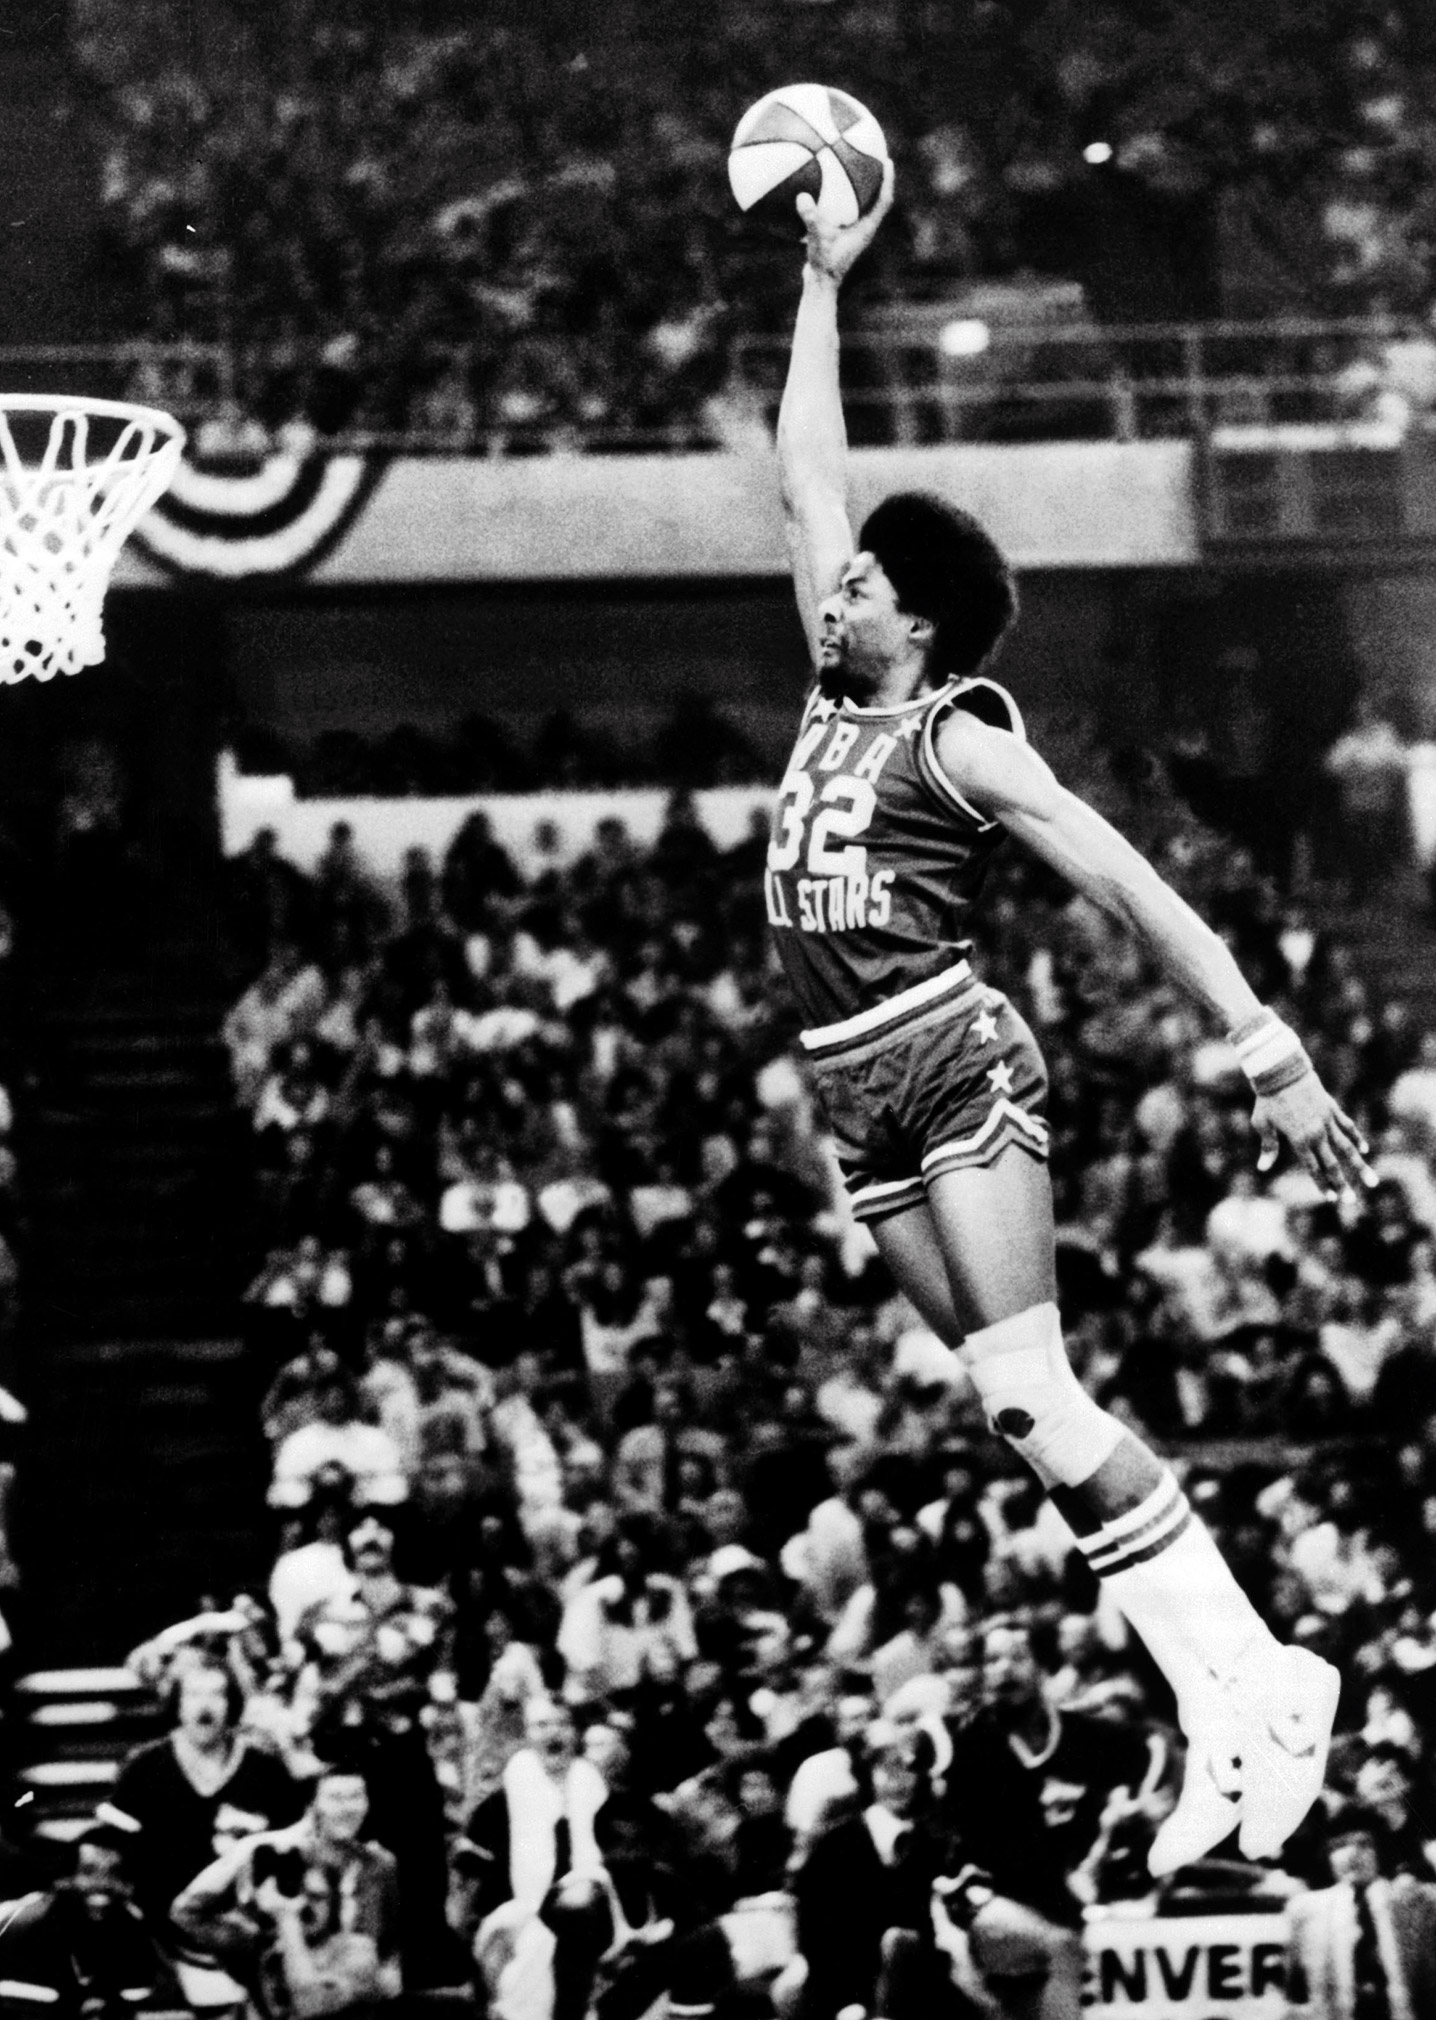 How the Starks dunk changed NBA history - ESPN - TrueHoop- ESPN